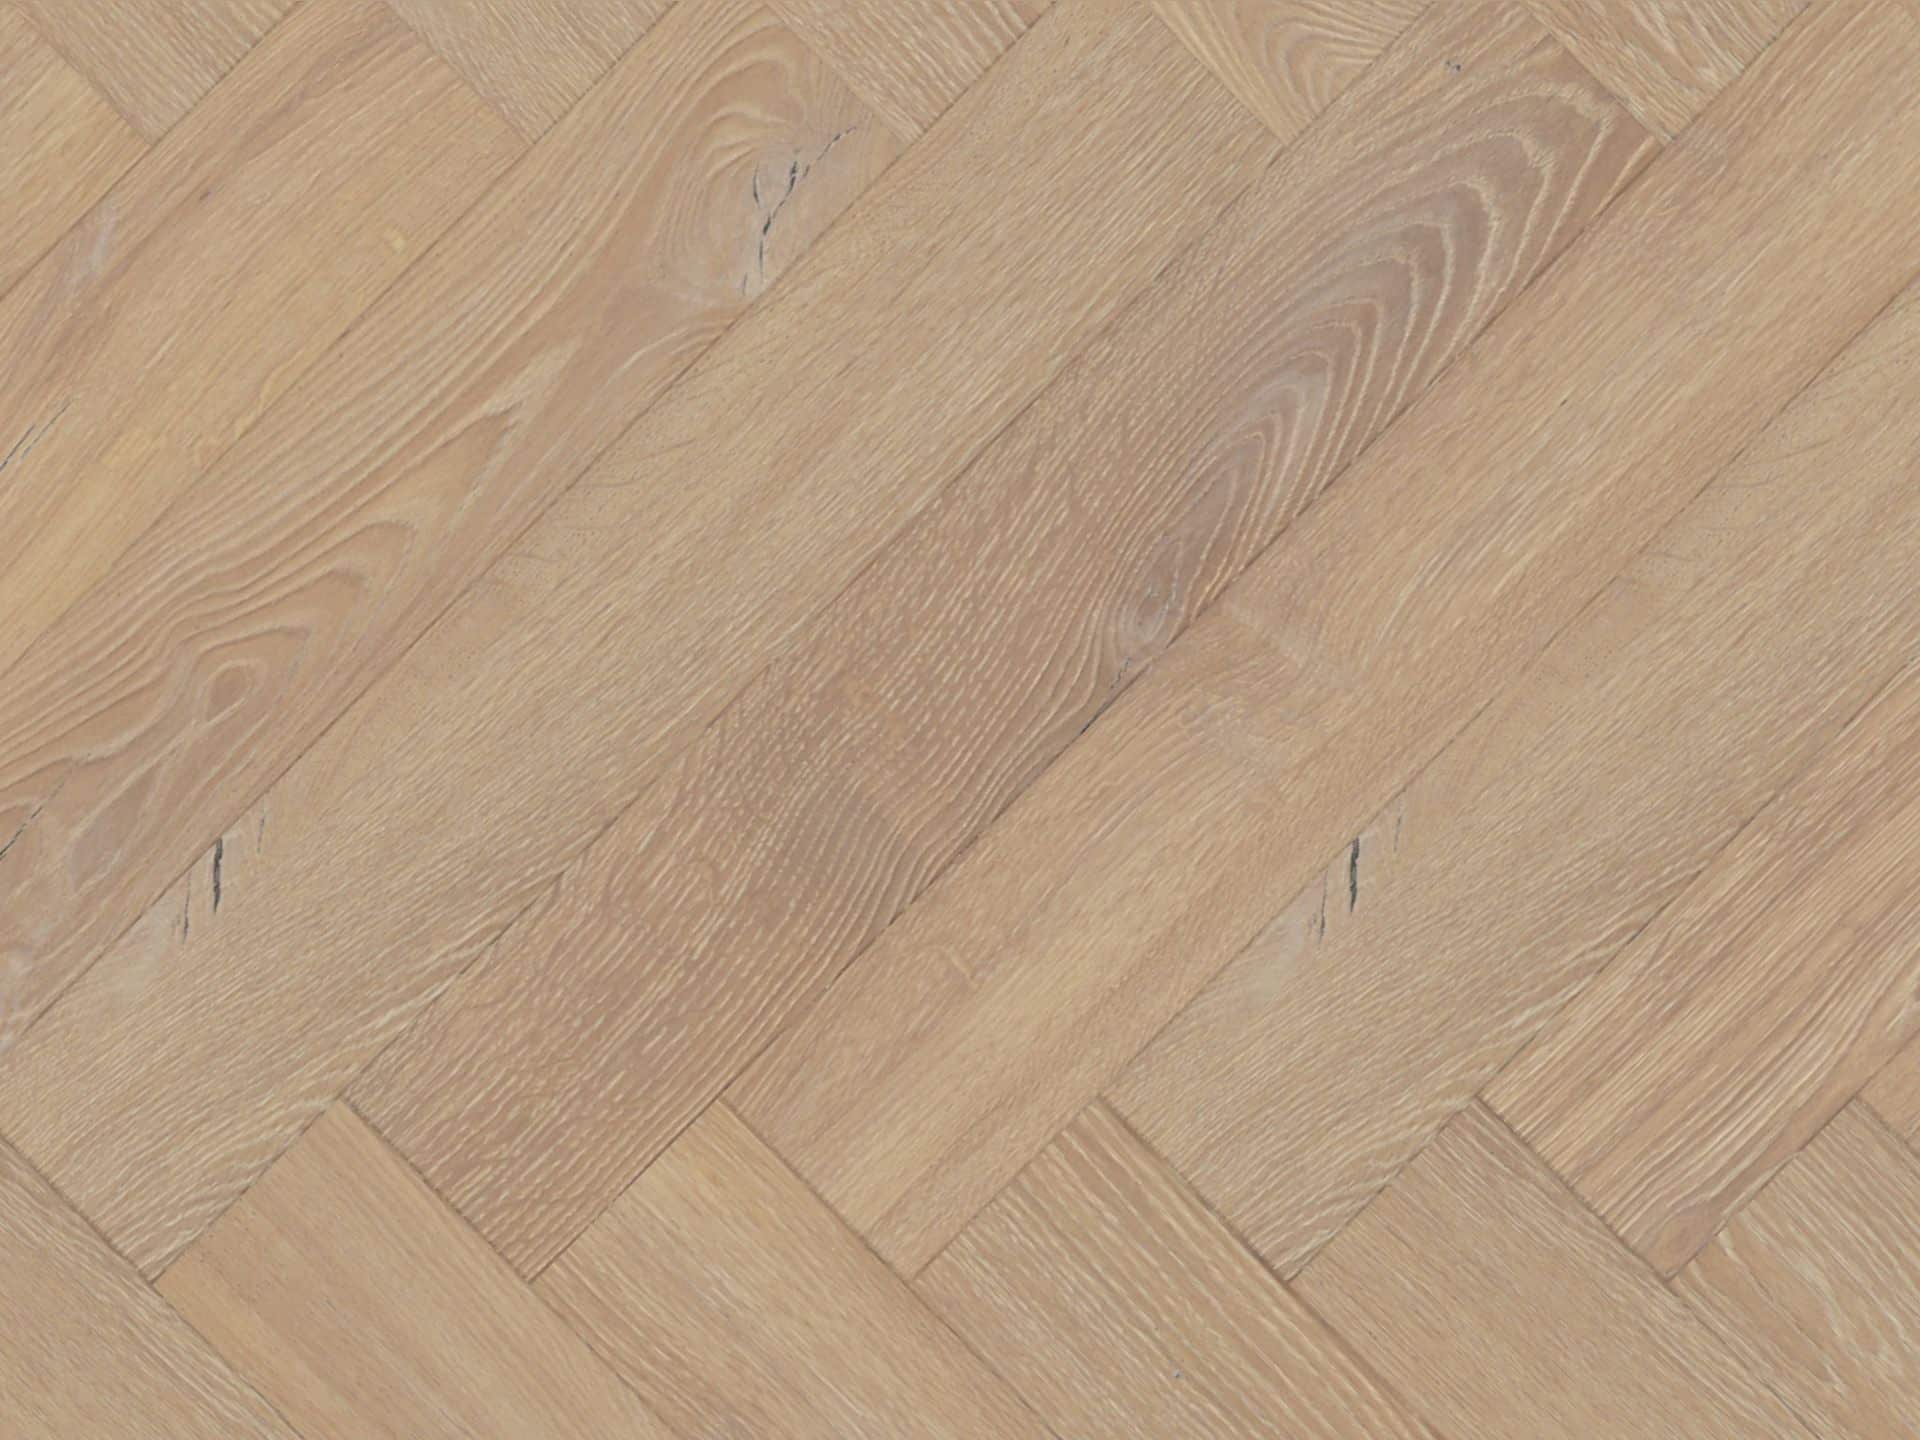 Desert Oak Herringbone flooring close up